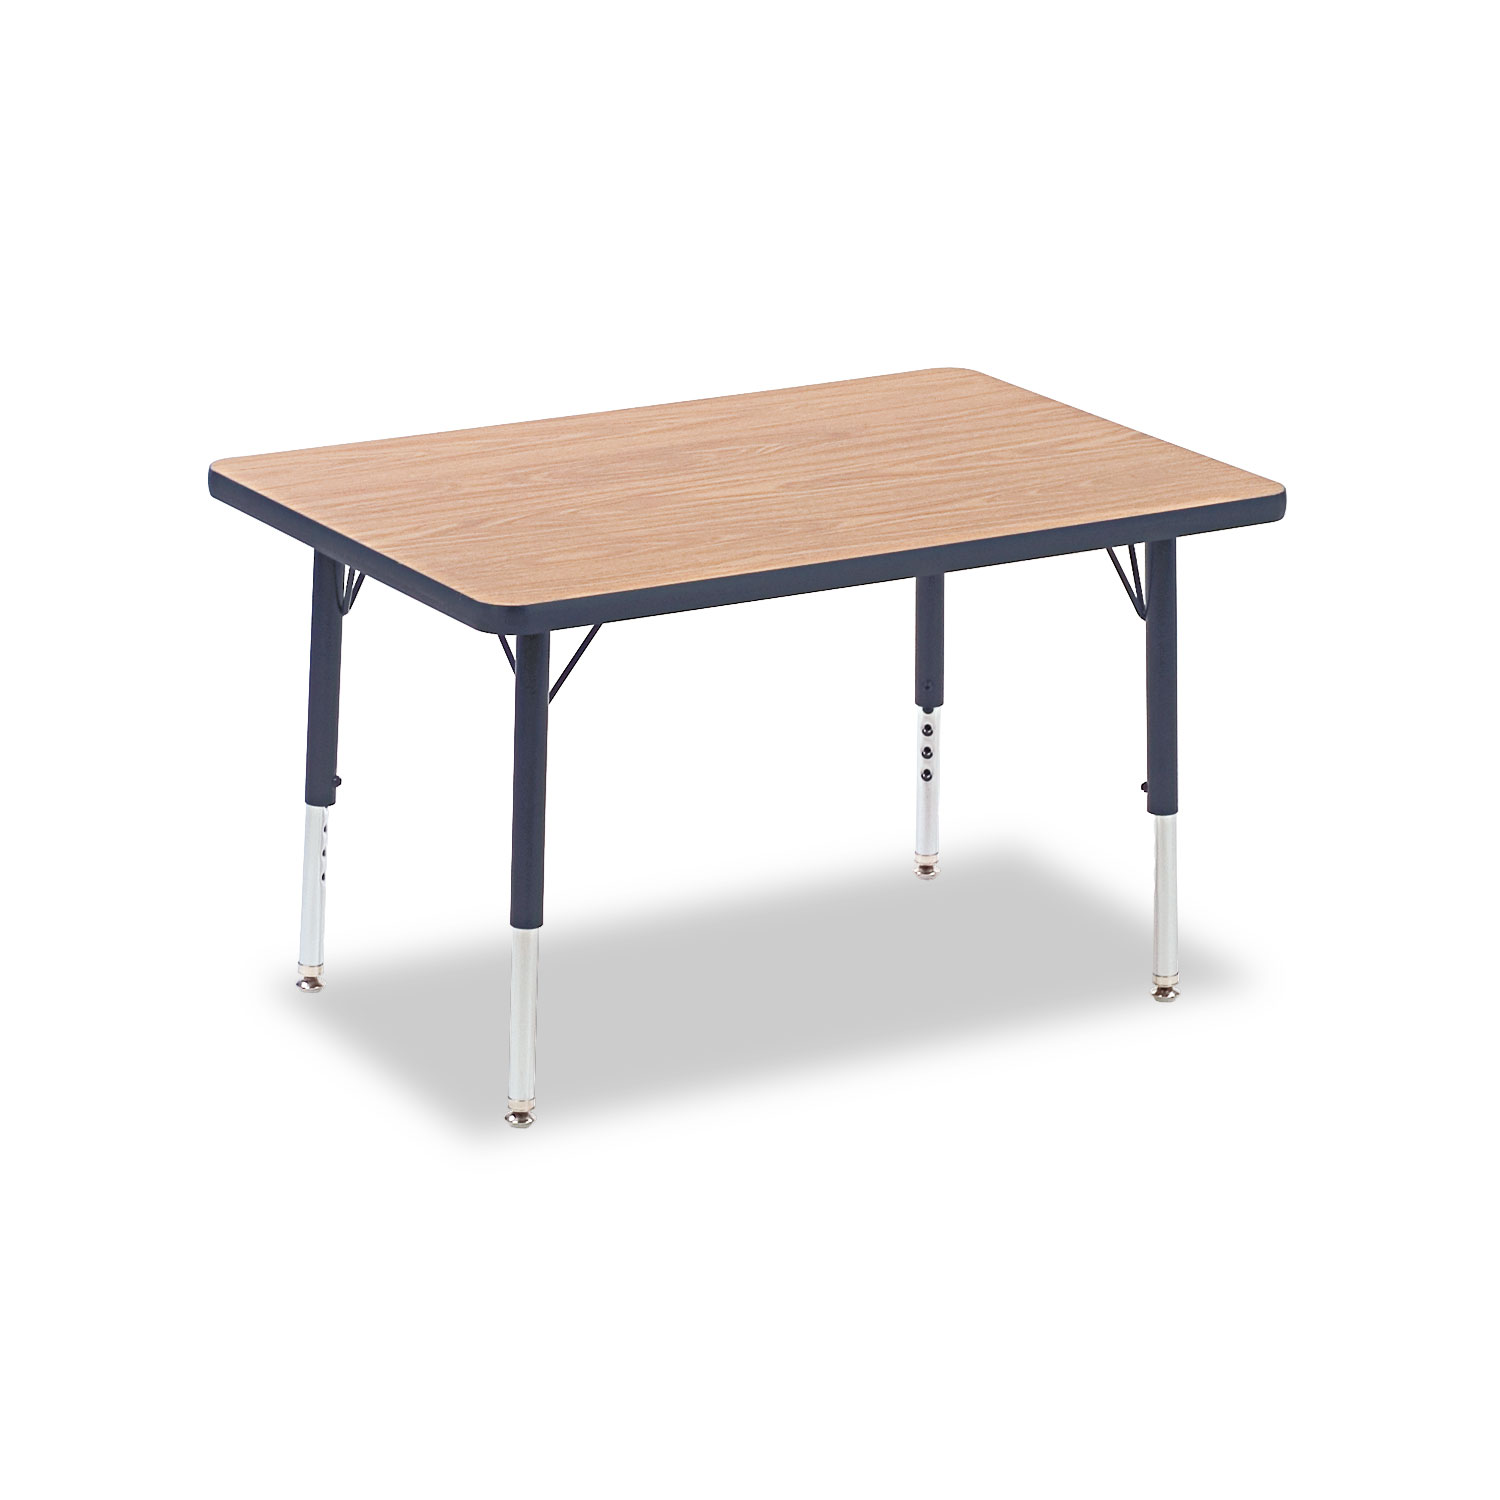 4000 Series Rectangular Activity Table, 24w x 36d x 22-30h, Medium Oak/Black Top